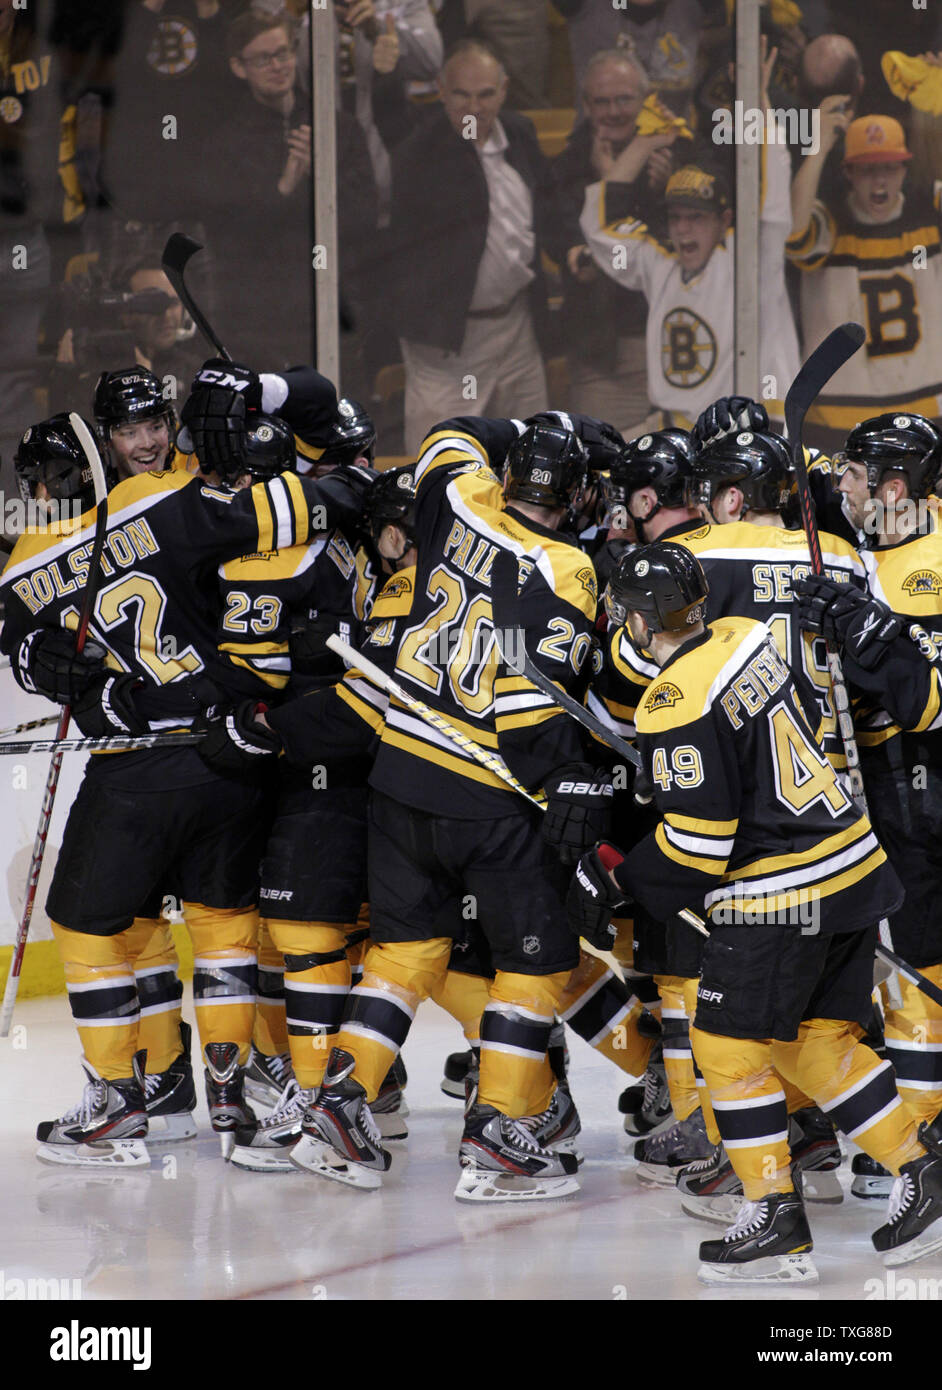 Boston Garden Boston Bruins Hockey NHL Photo 8x12 Unsigned Glossy Game  Picture